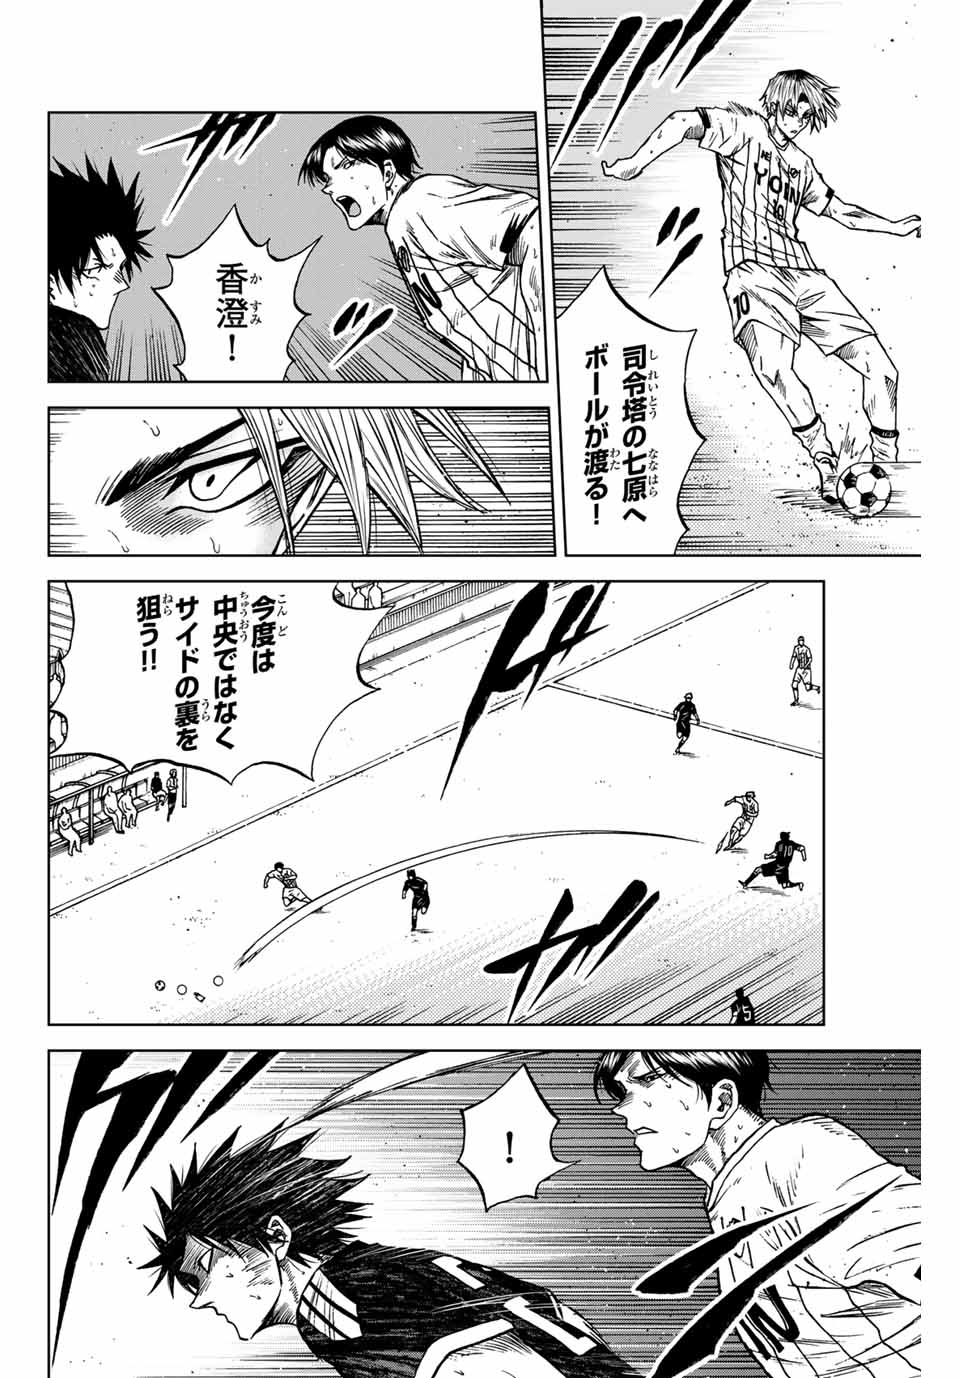 Aoku Somero - Chapter 95 - Page 4